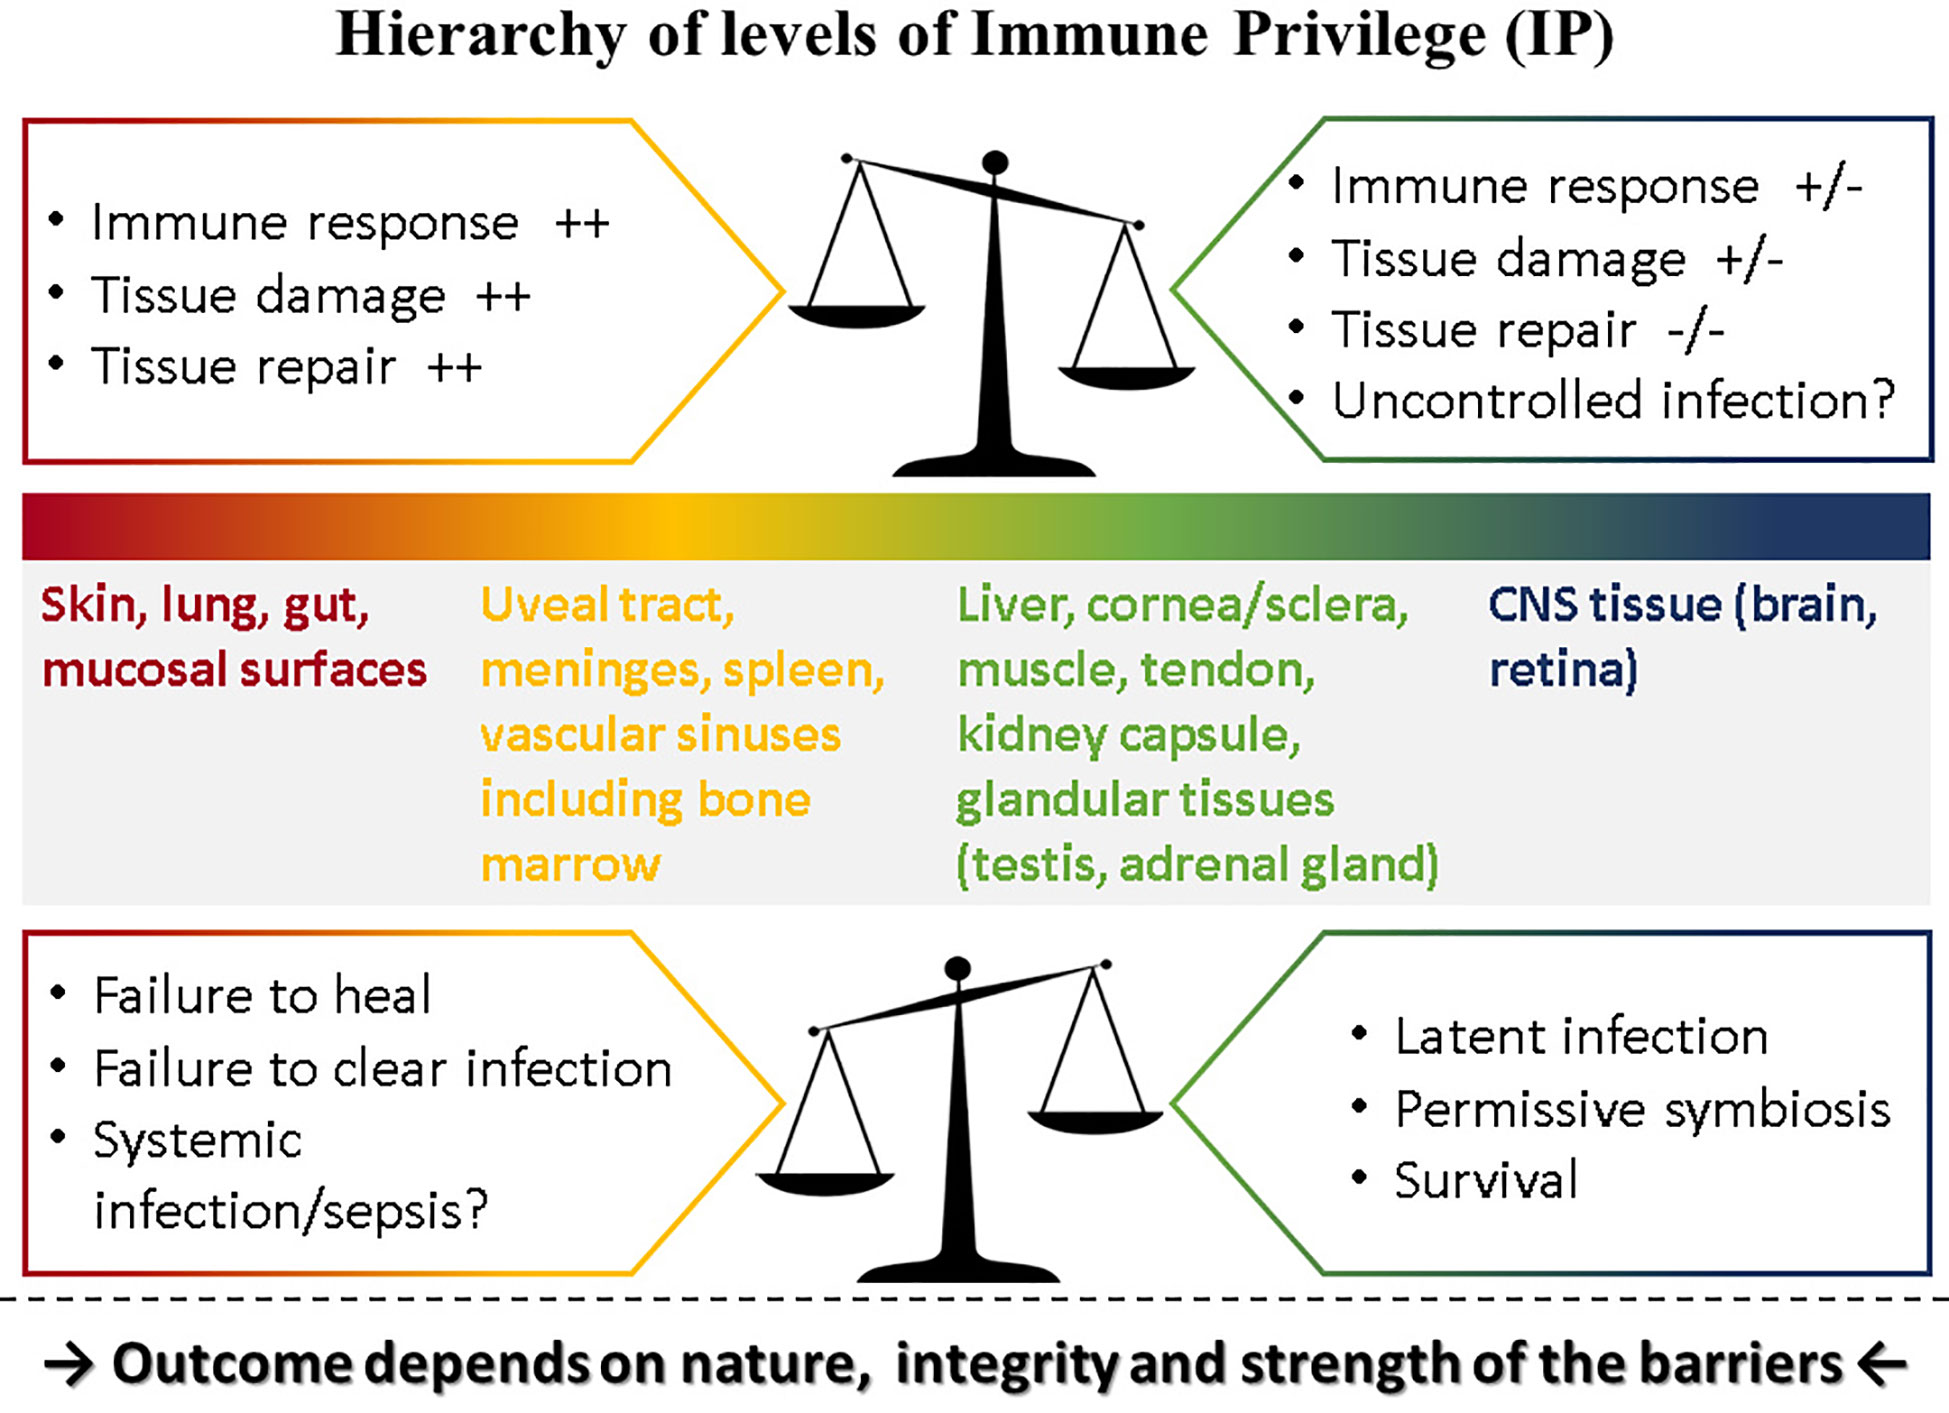 Ocular Immunology and Inflammation: Vol 31, No 6